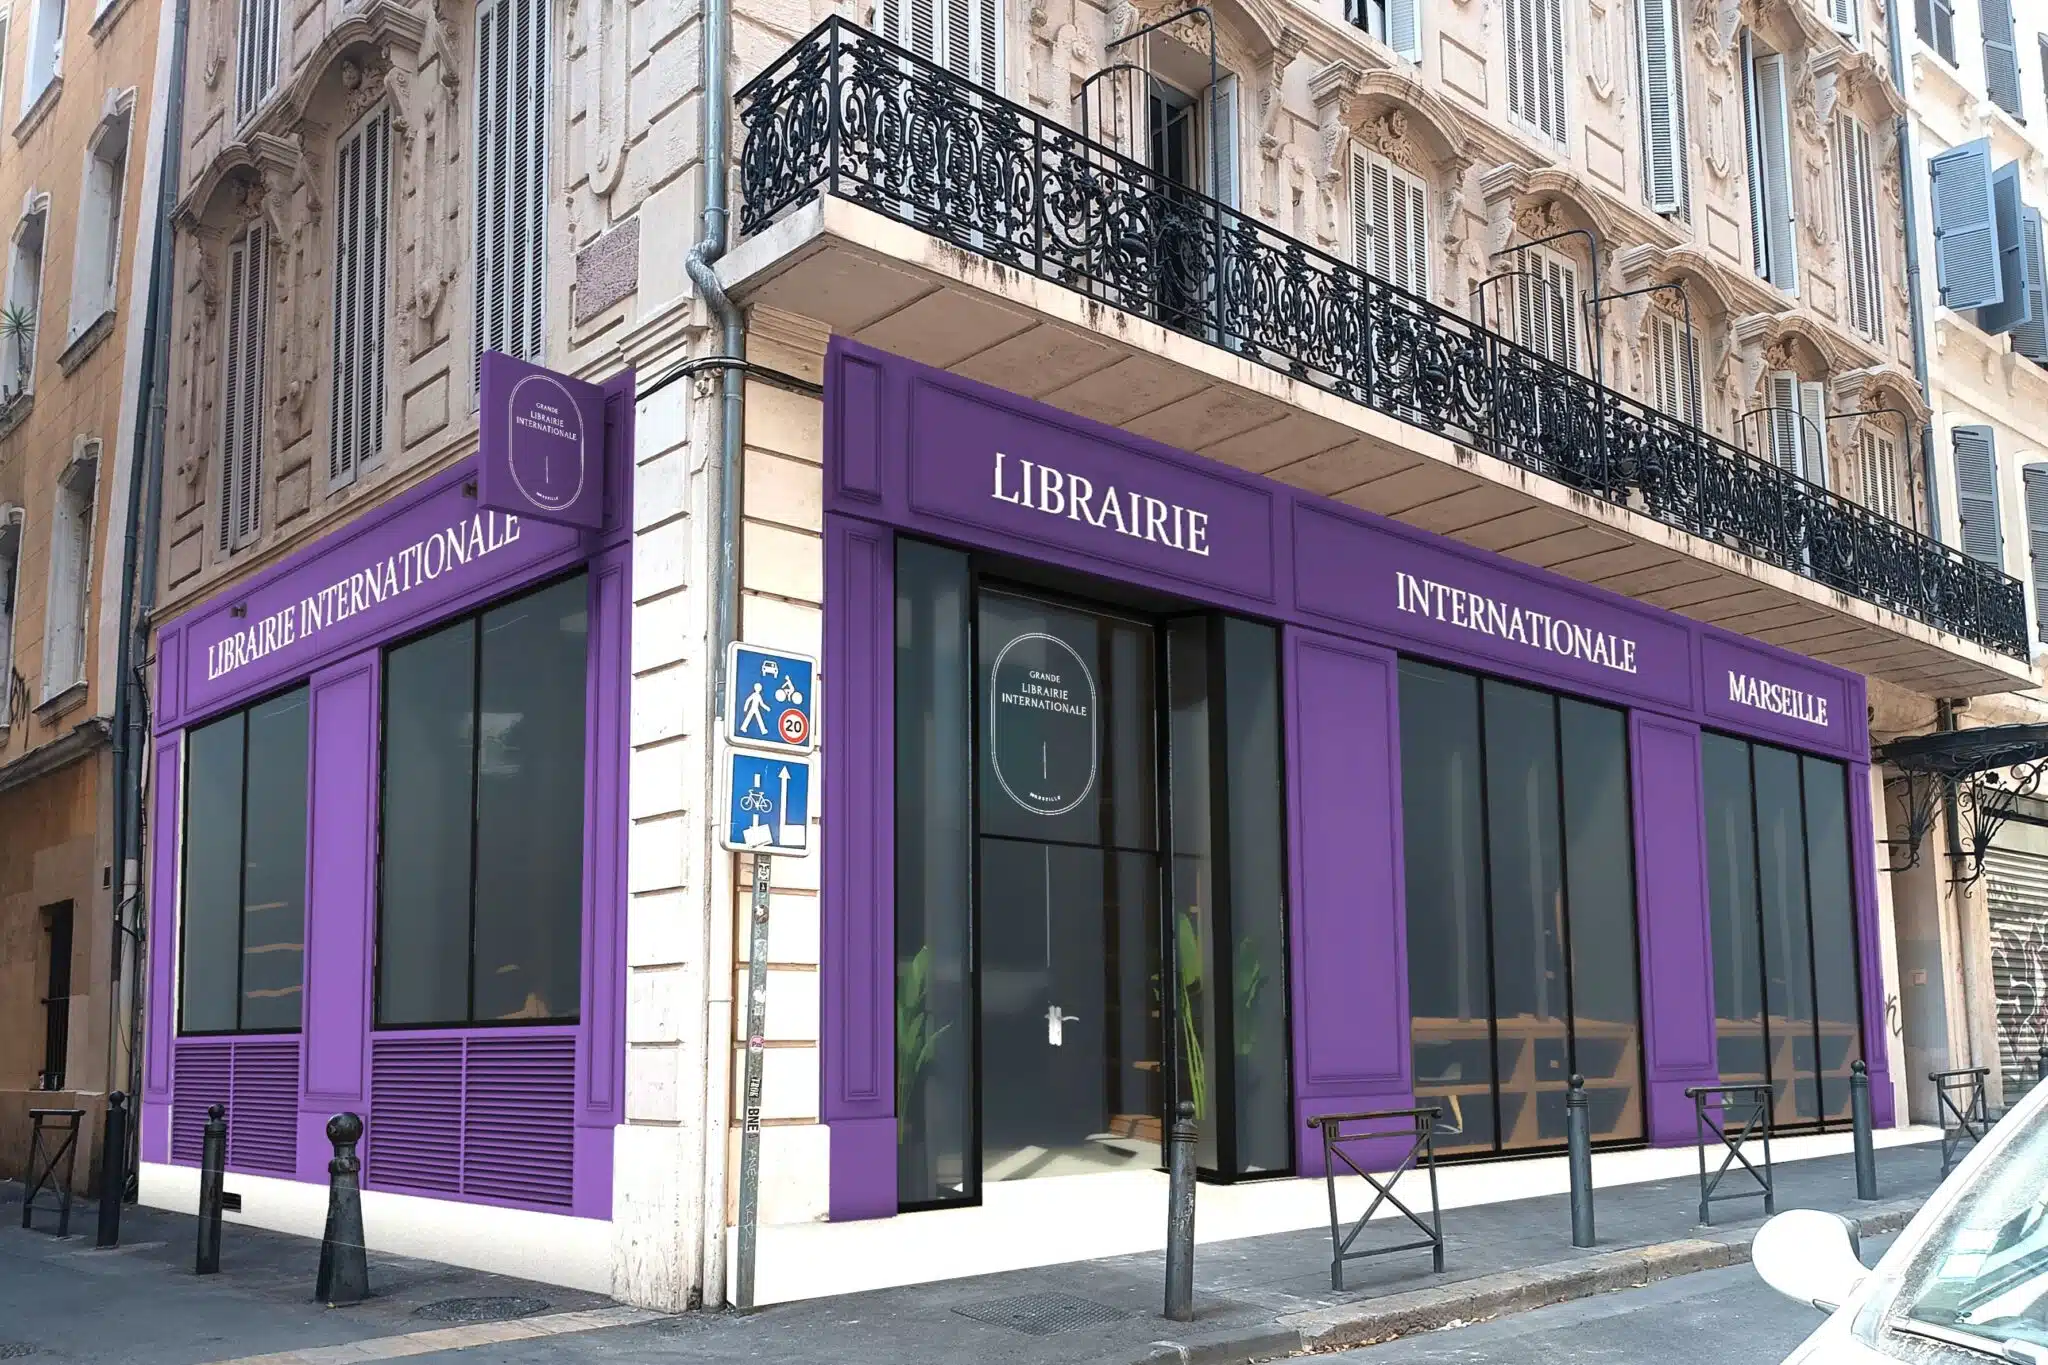 Belsunce, Les habitants de Belsunce, stars de l’expo inaugurale de la grande librairie internationale, Made in Marseille